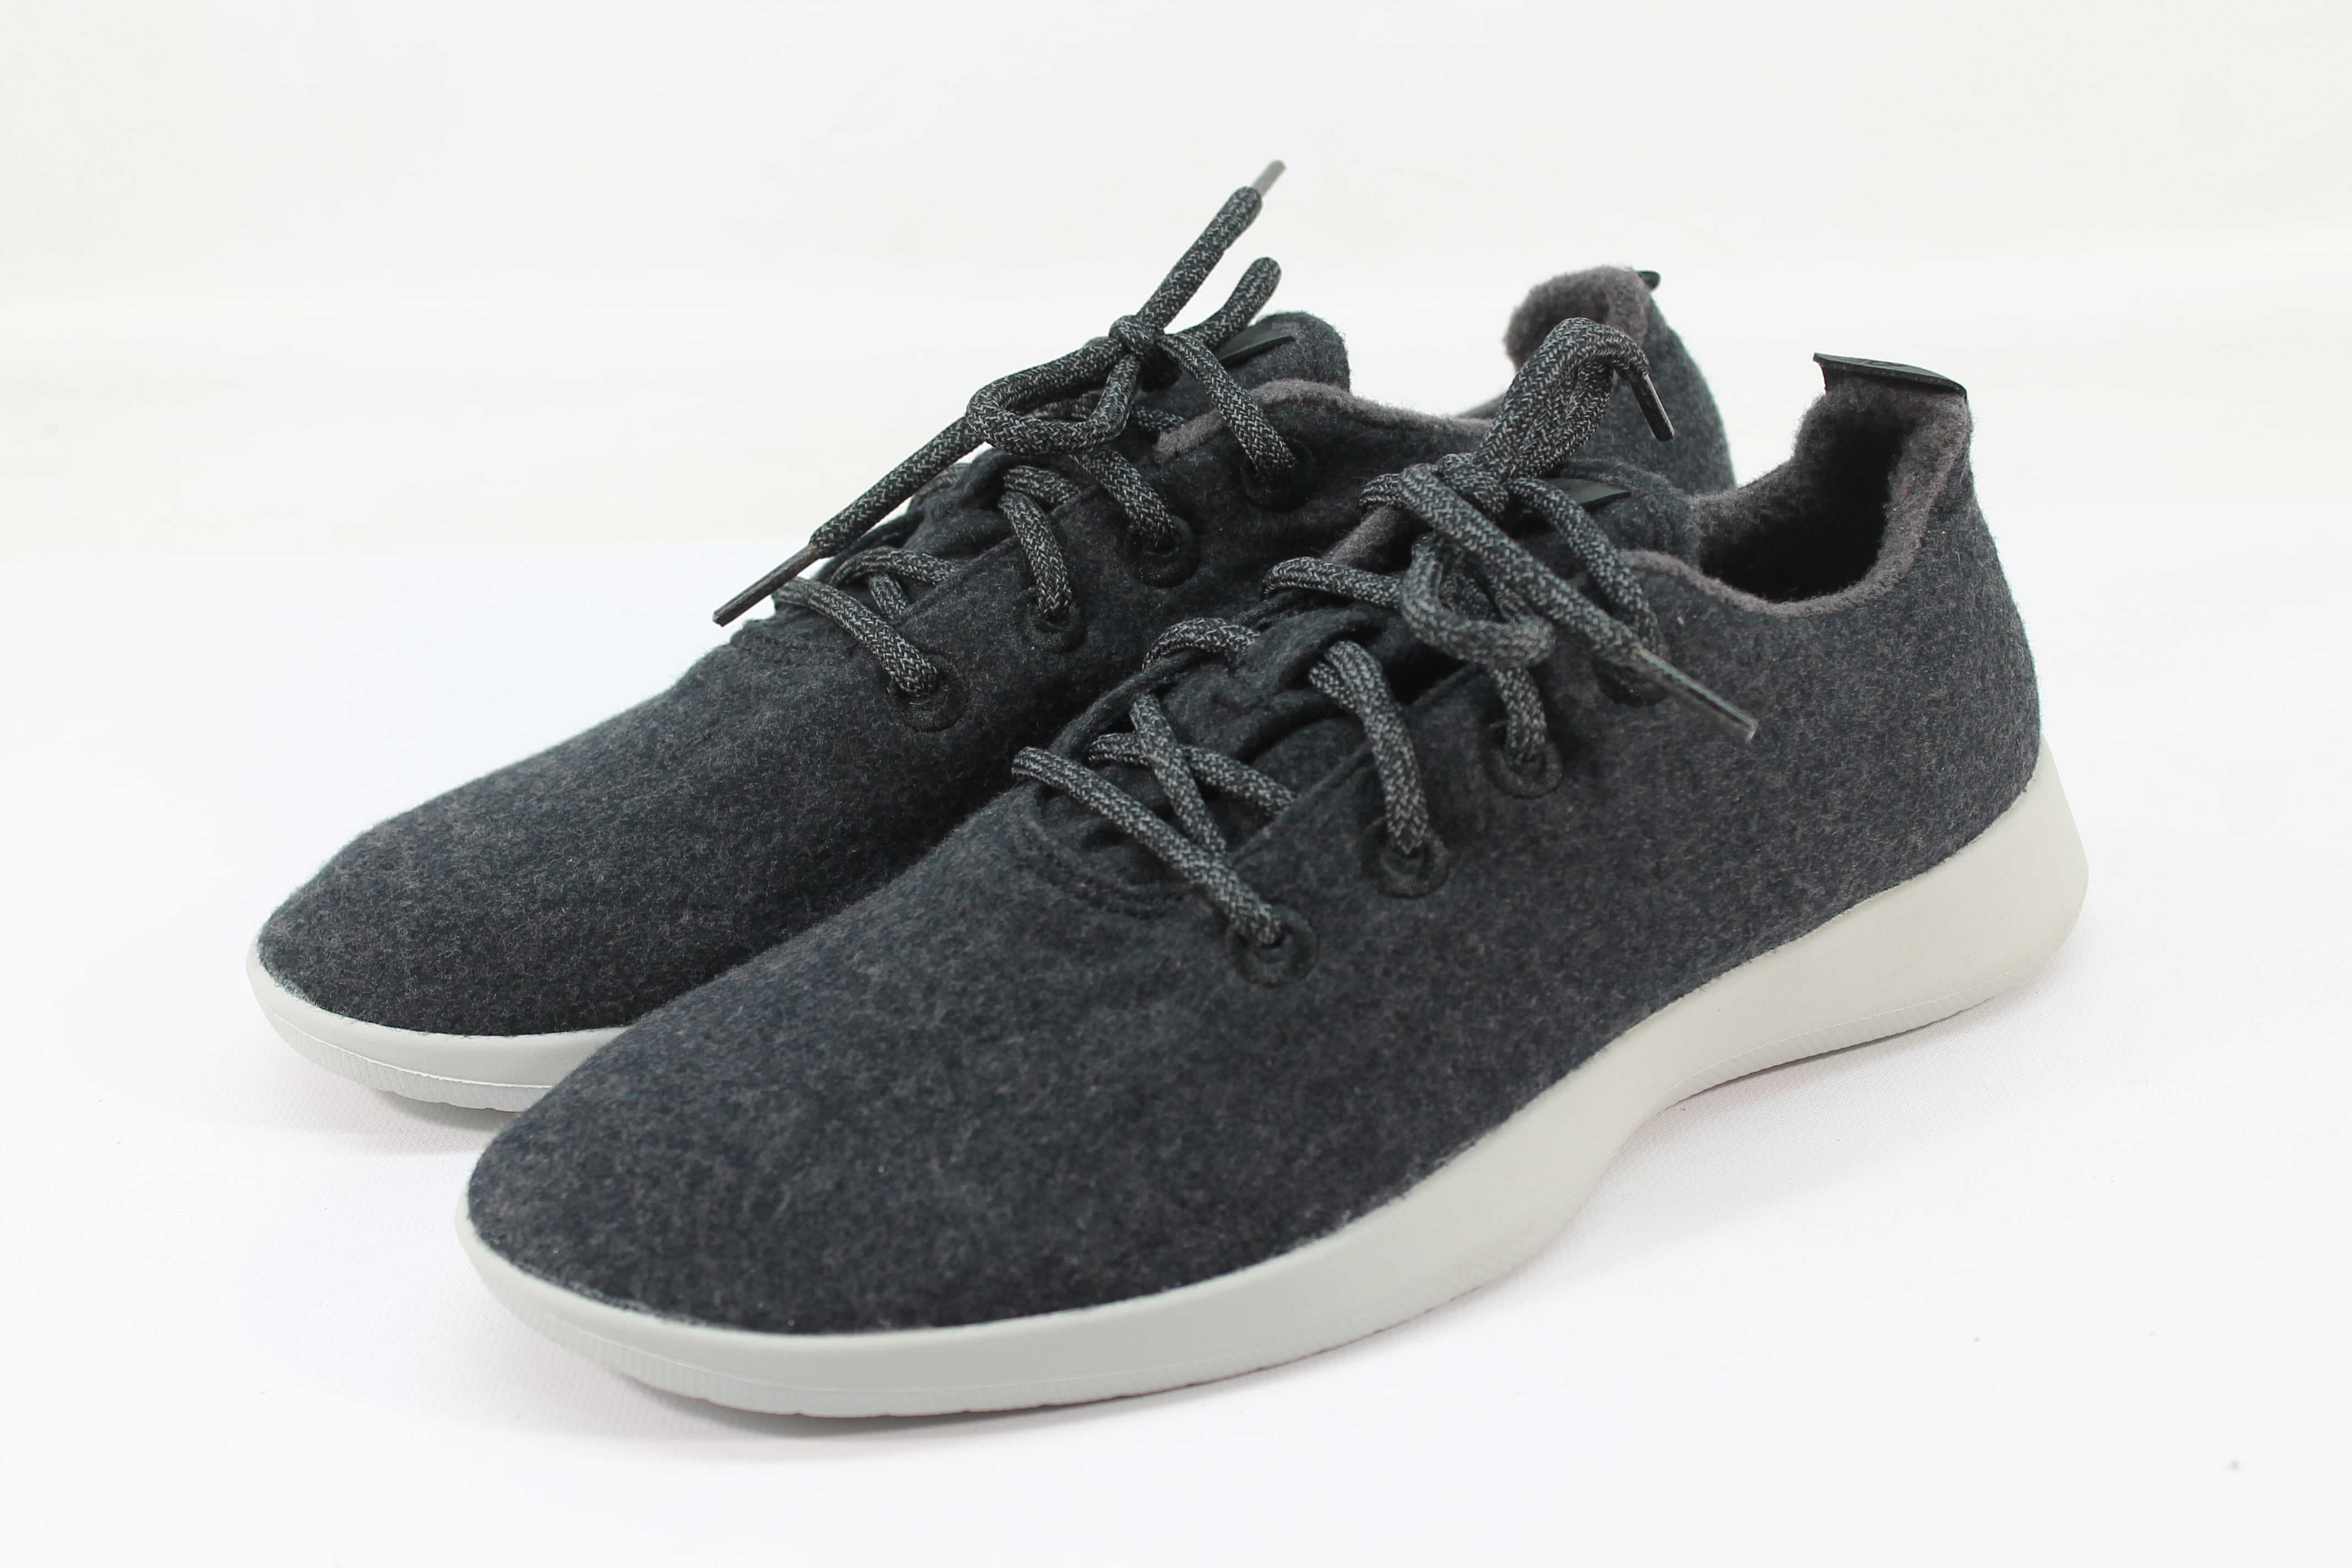 Allbirds Men's Wool Runners Natural Black/Grey Sole Comfort Shoes NW/OB 